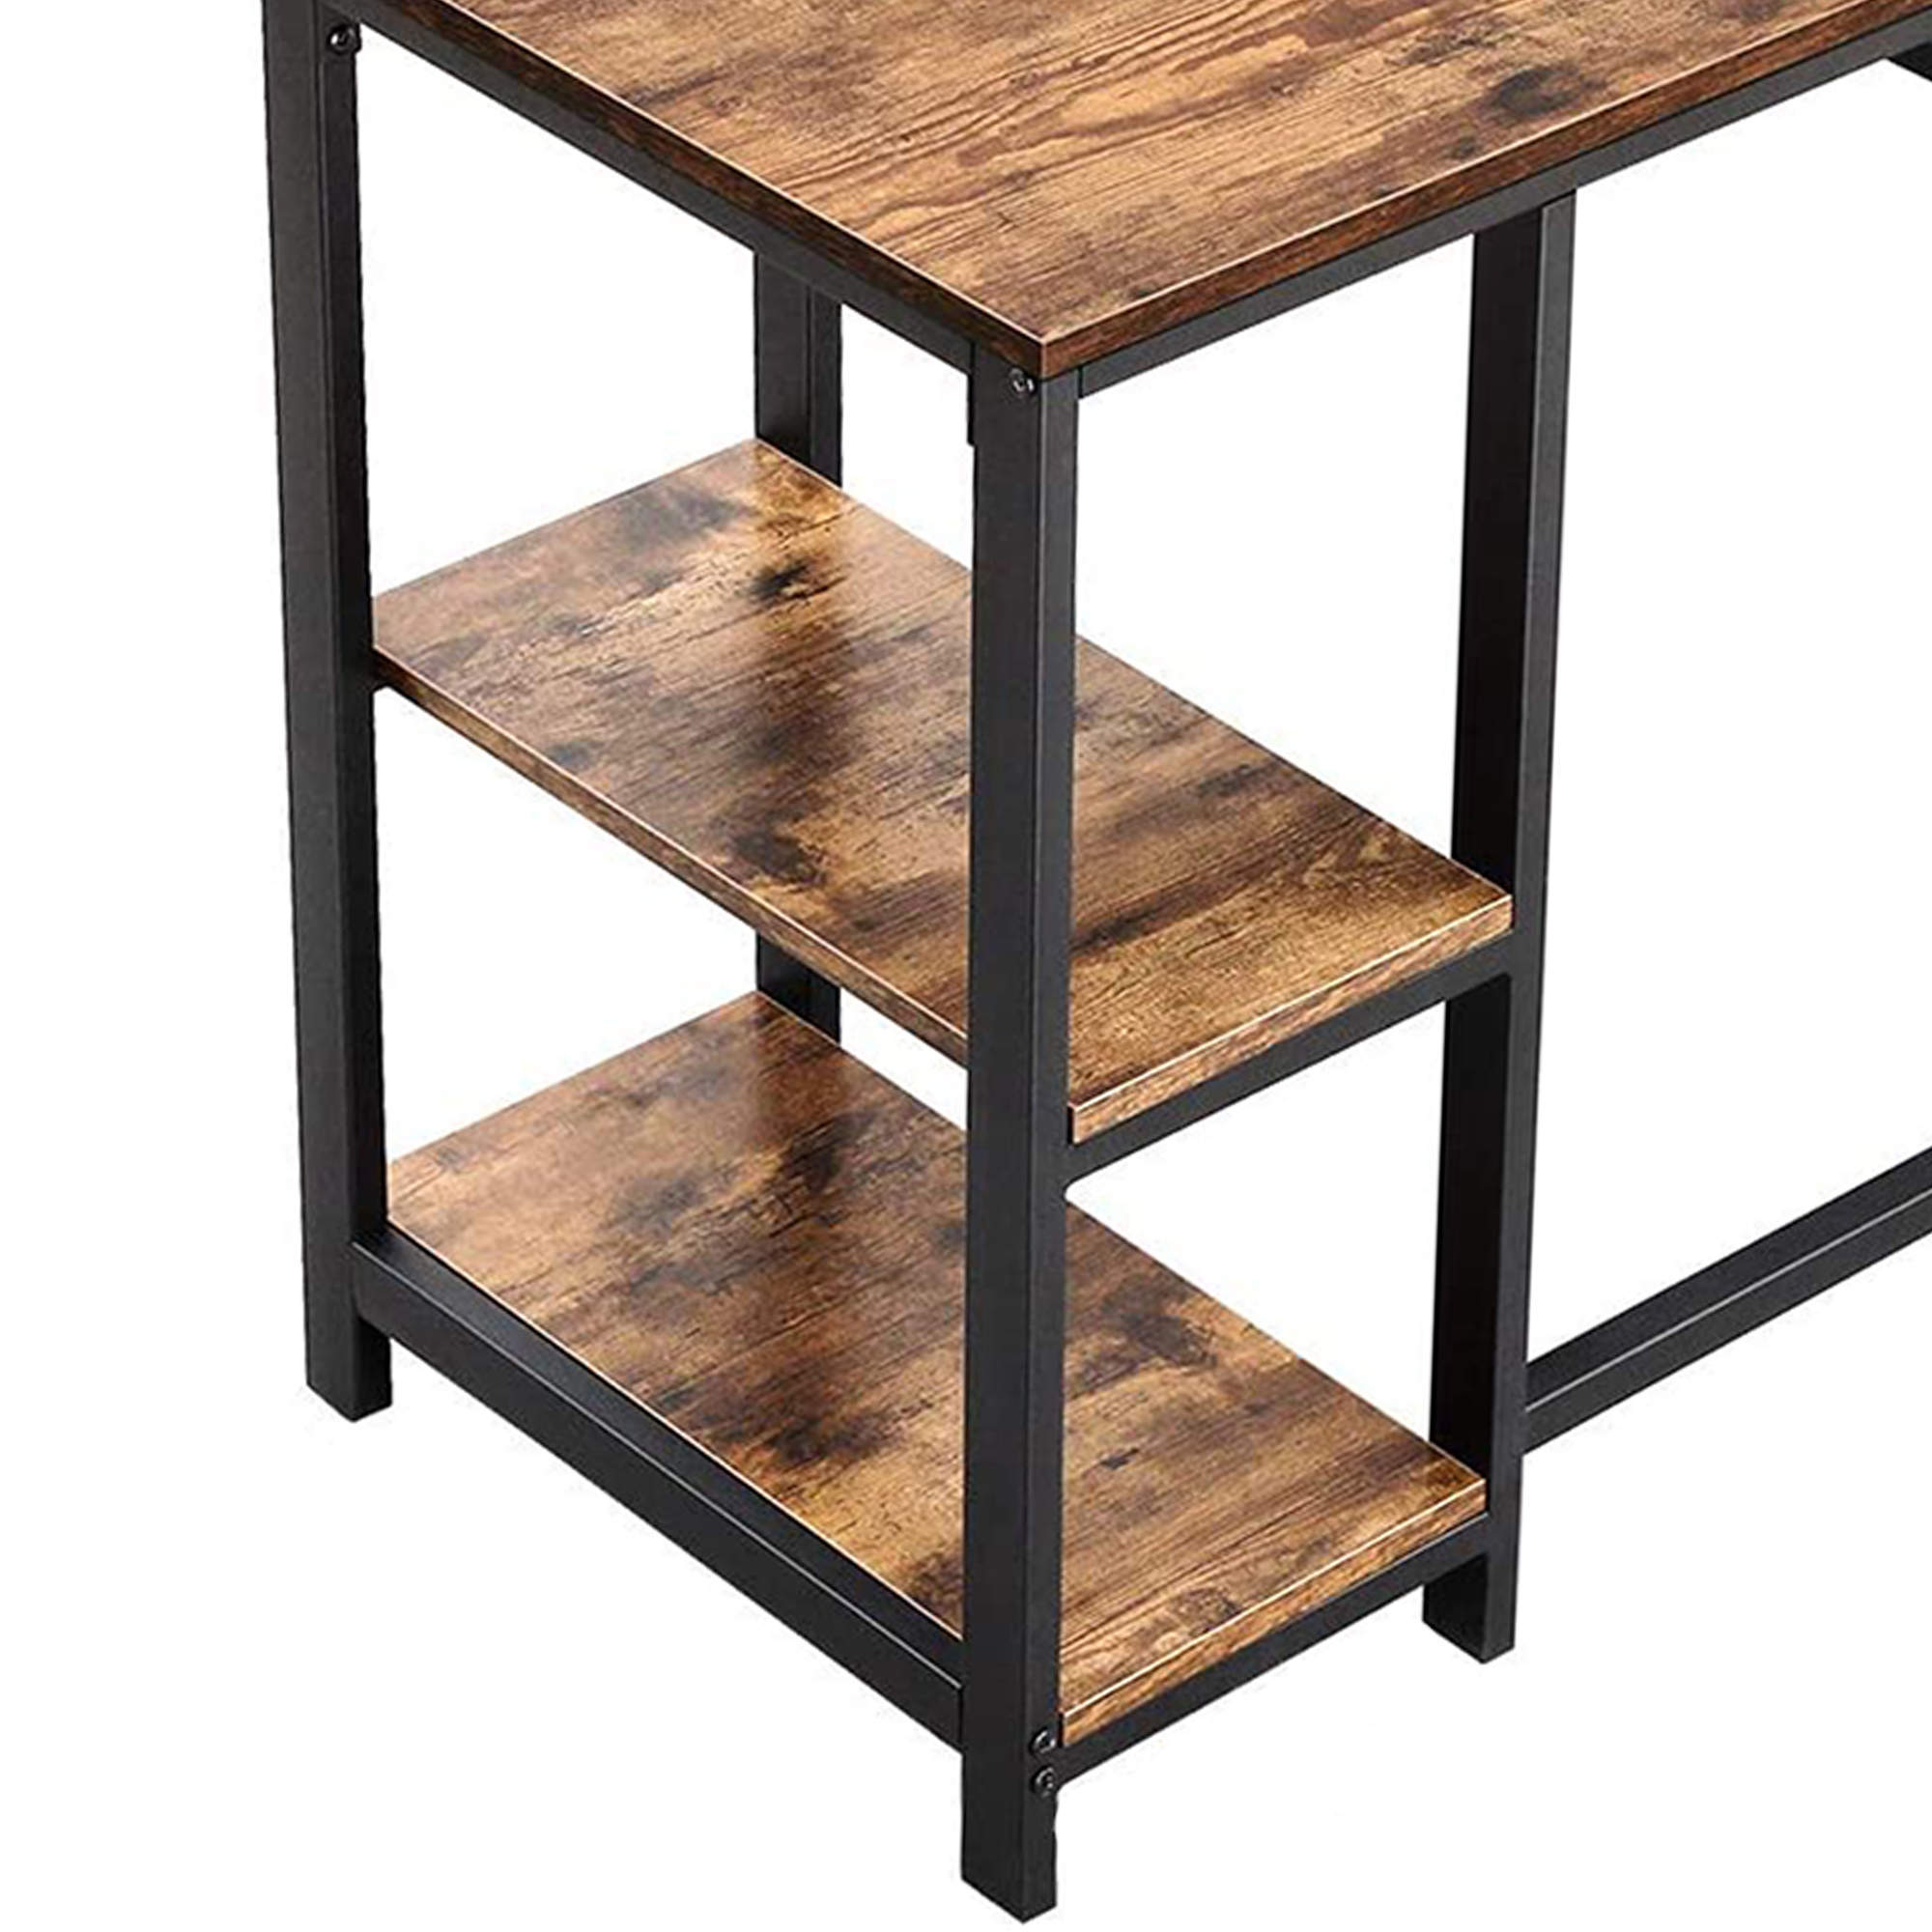 L Shape Wood And Metal Frame Computer Desk With 2 Shelves, Brown And Black- Saltoro Sherpi